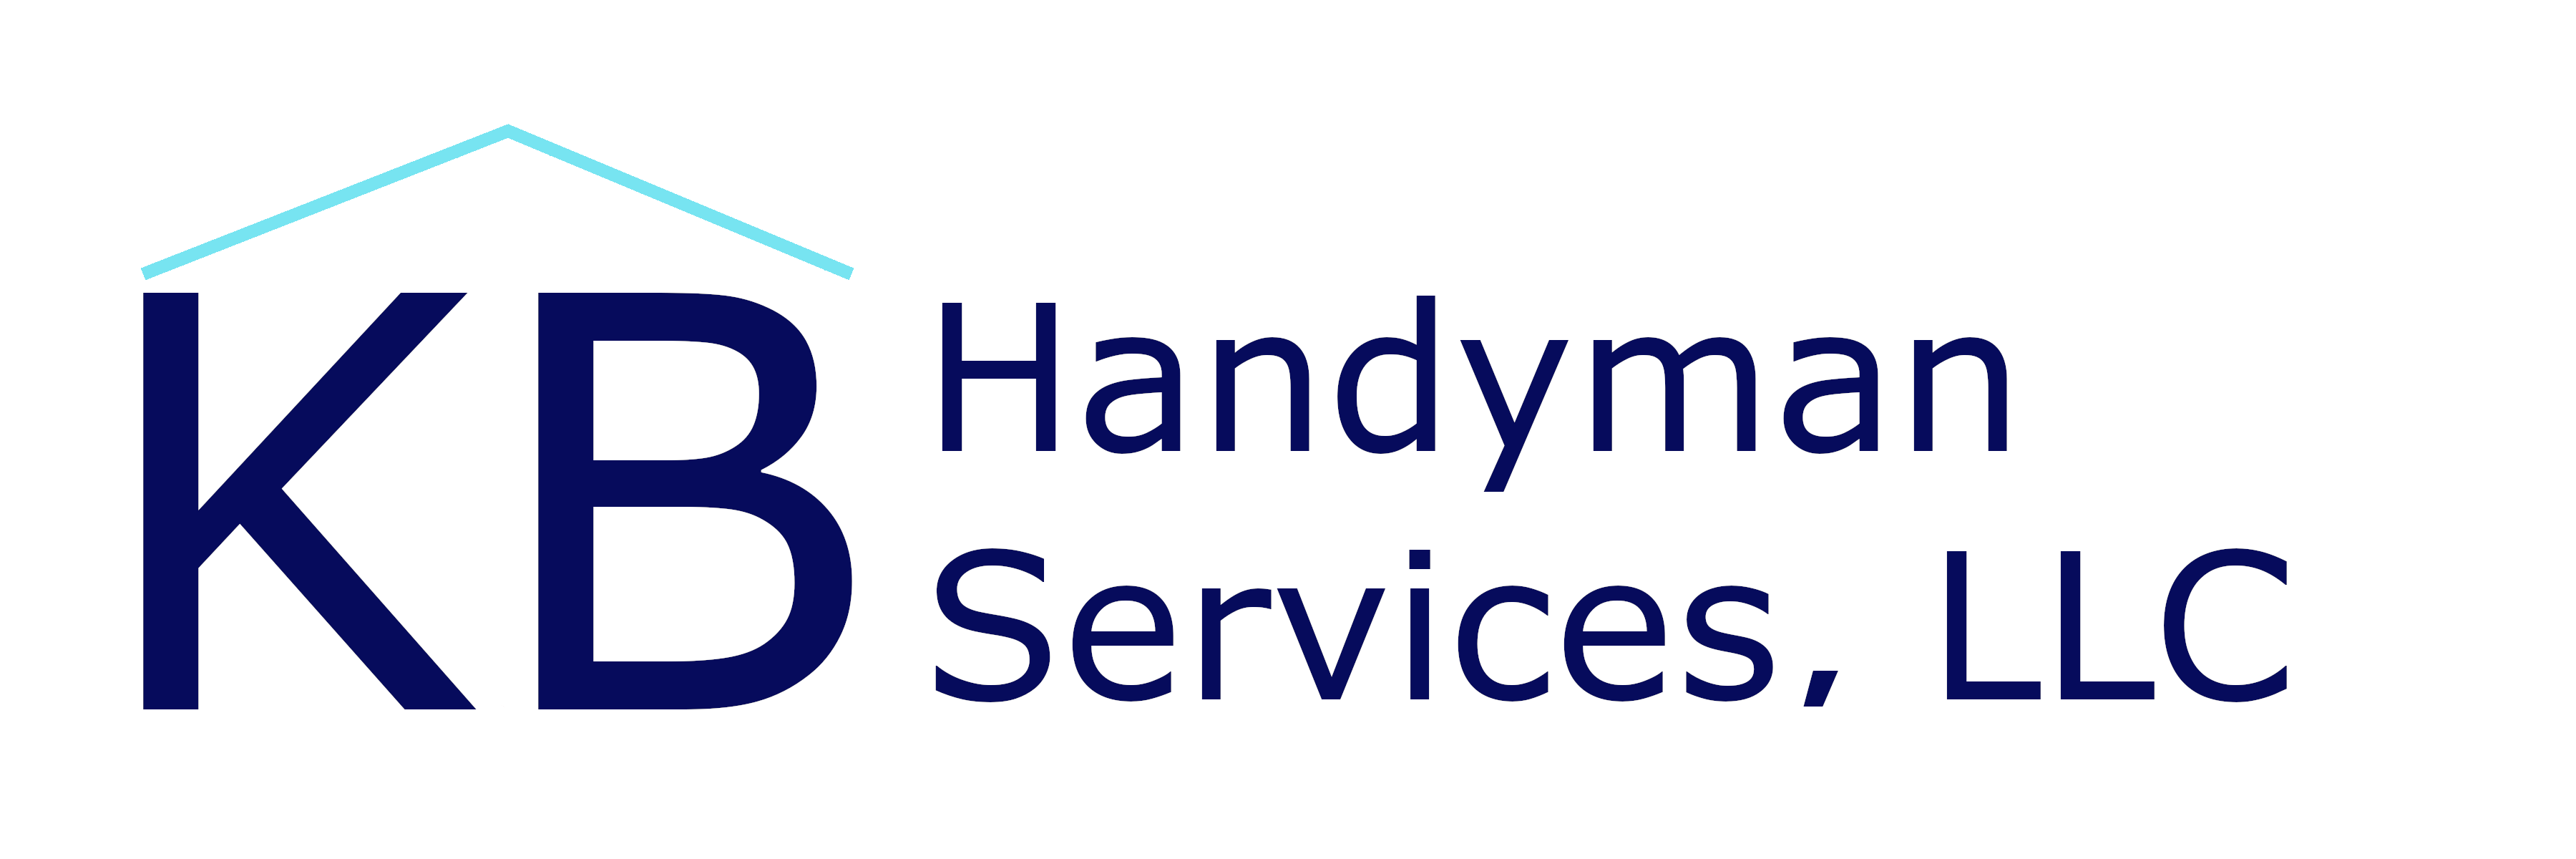 KB Handyman Services, LLC Logo